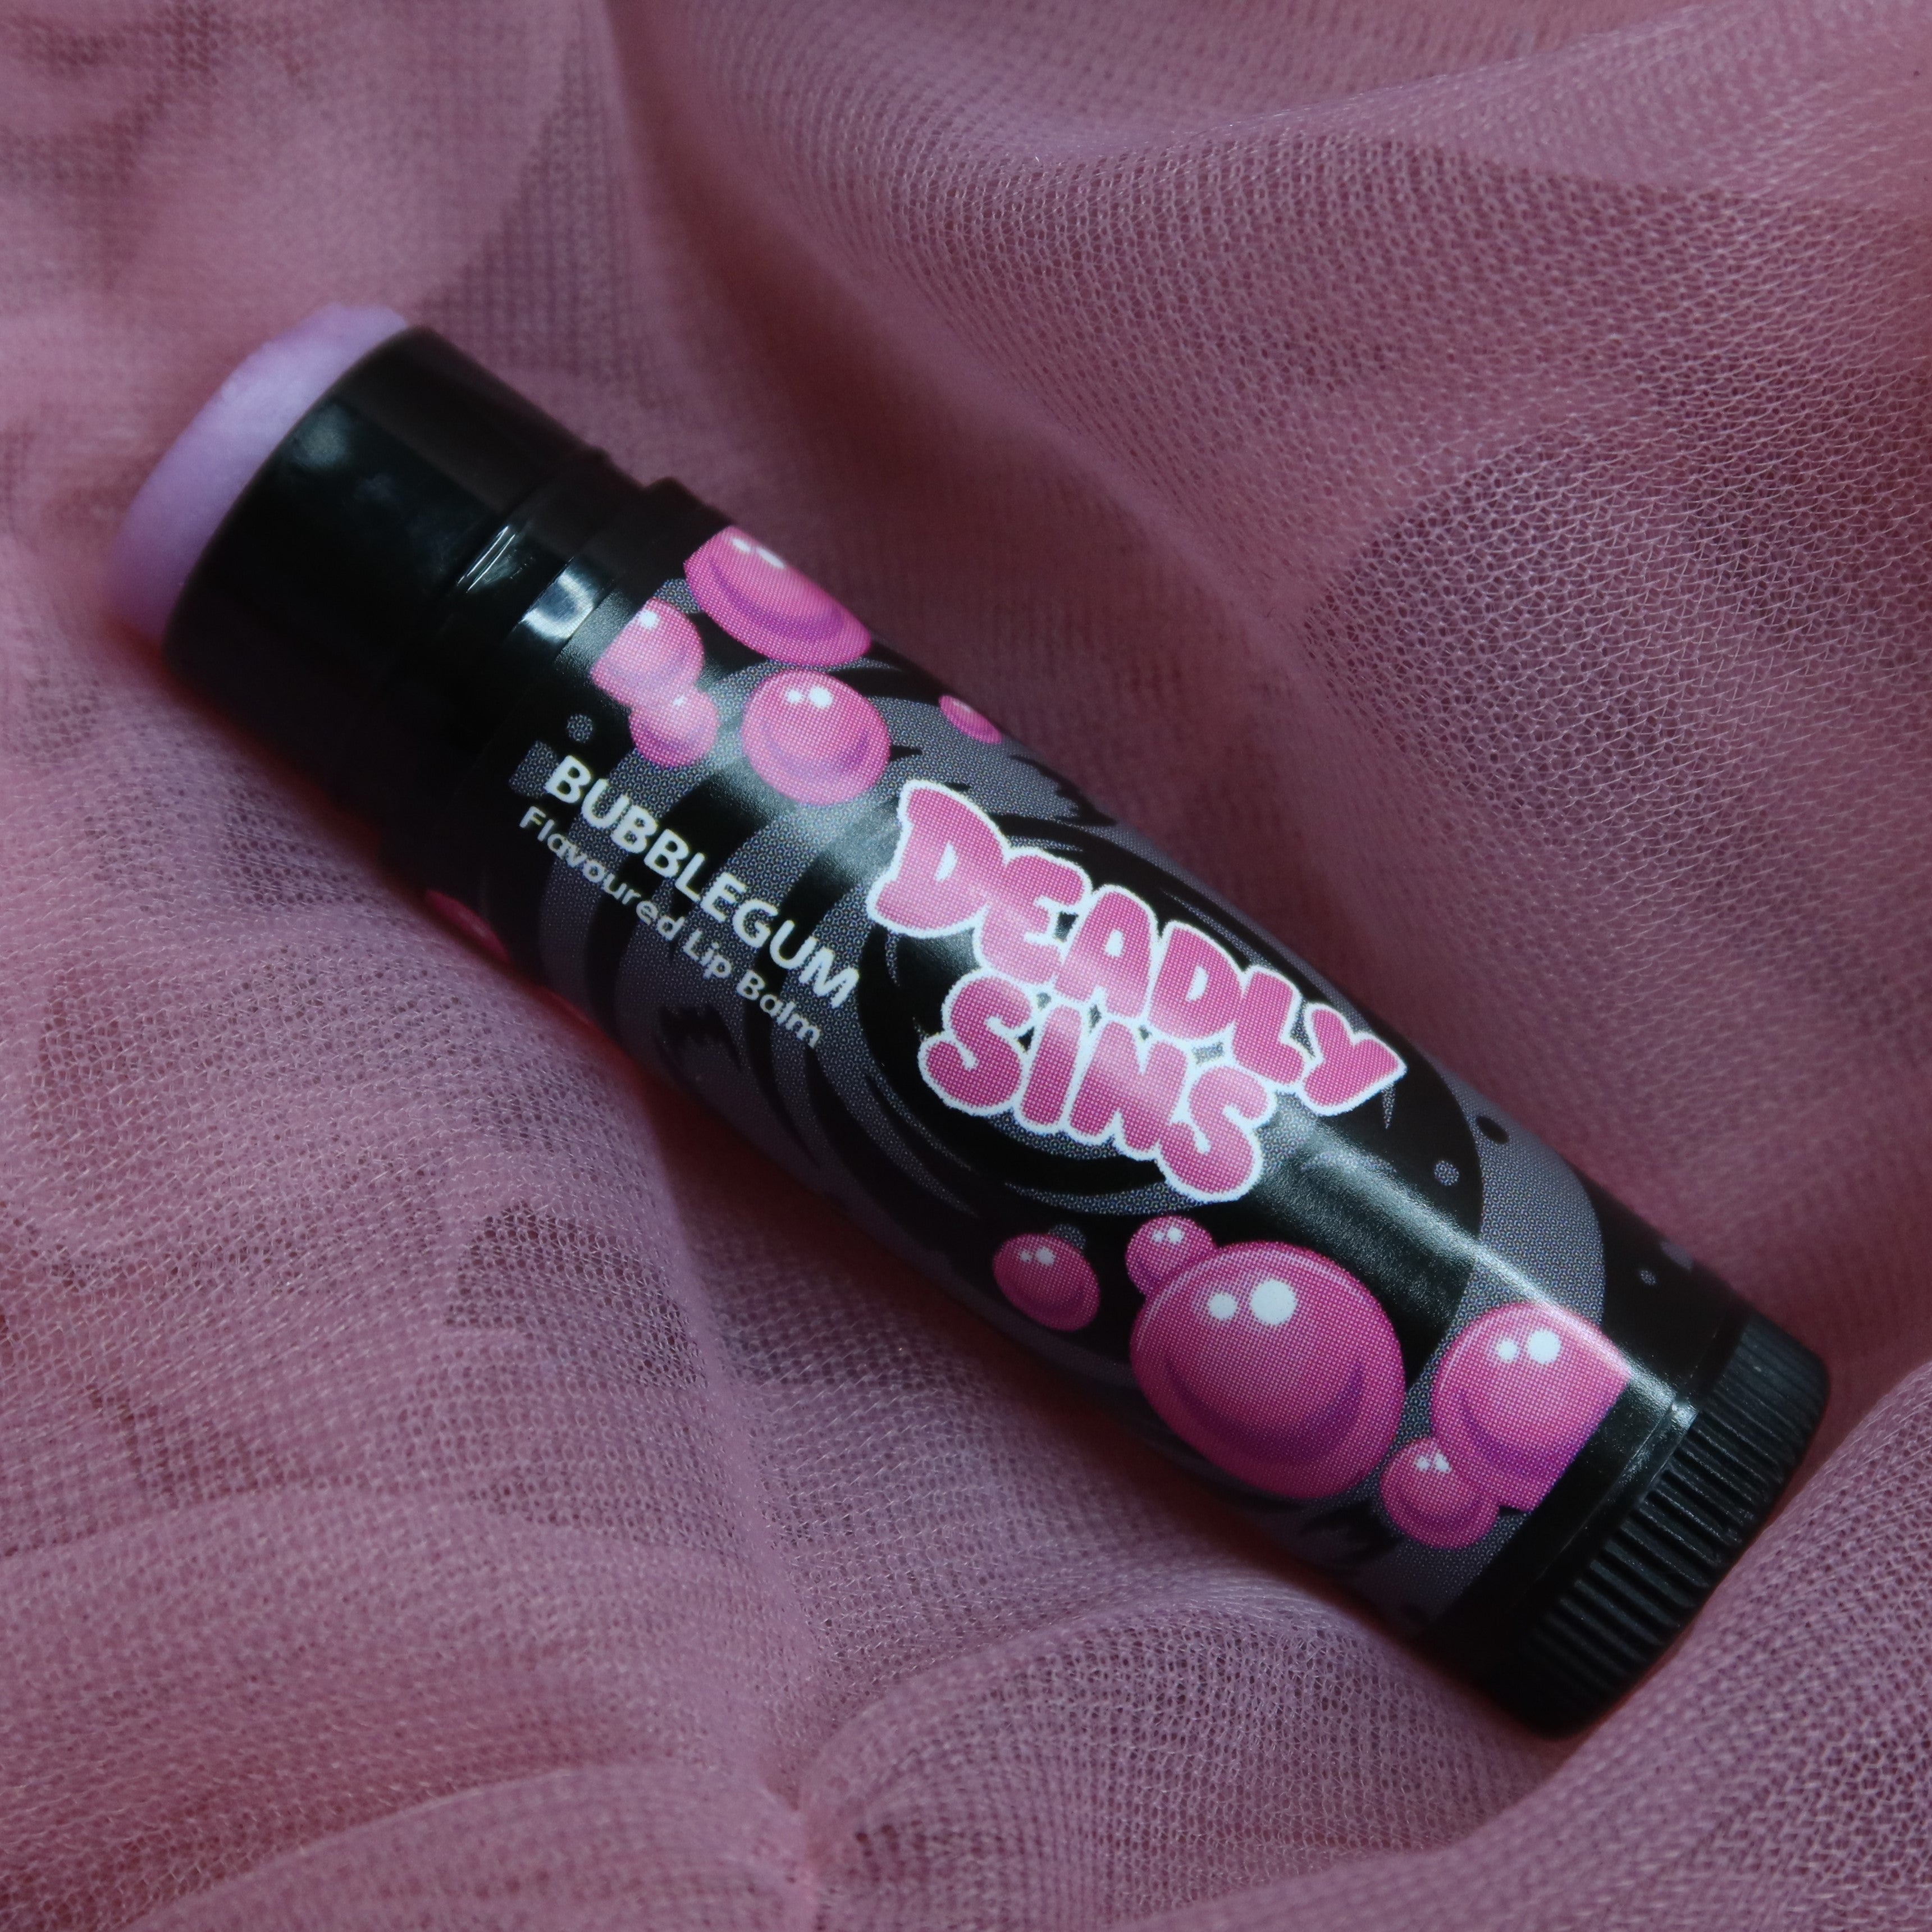 Australia Pink Bubble Gum Lip Balm Deadly Sins Cosmetics